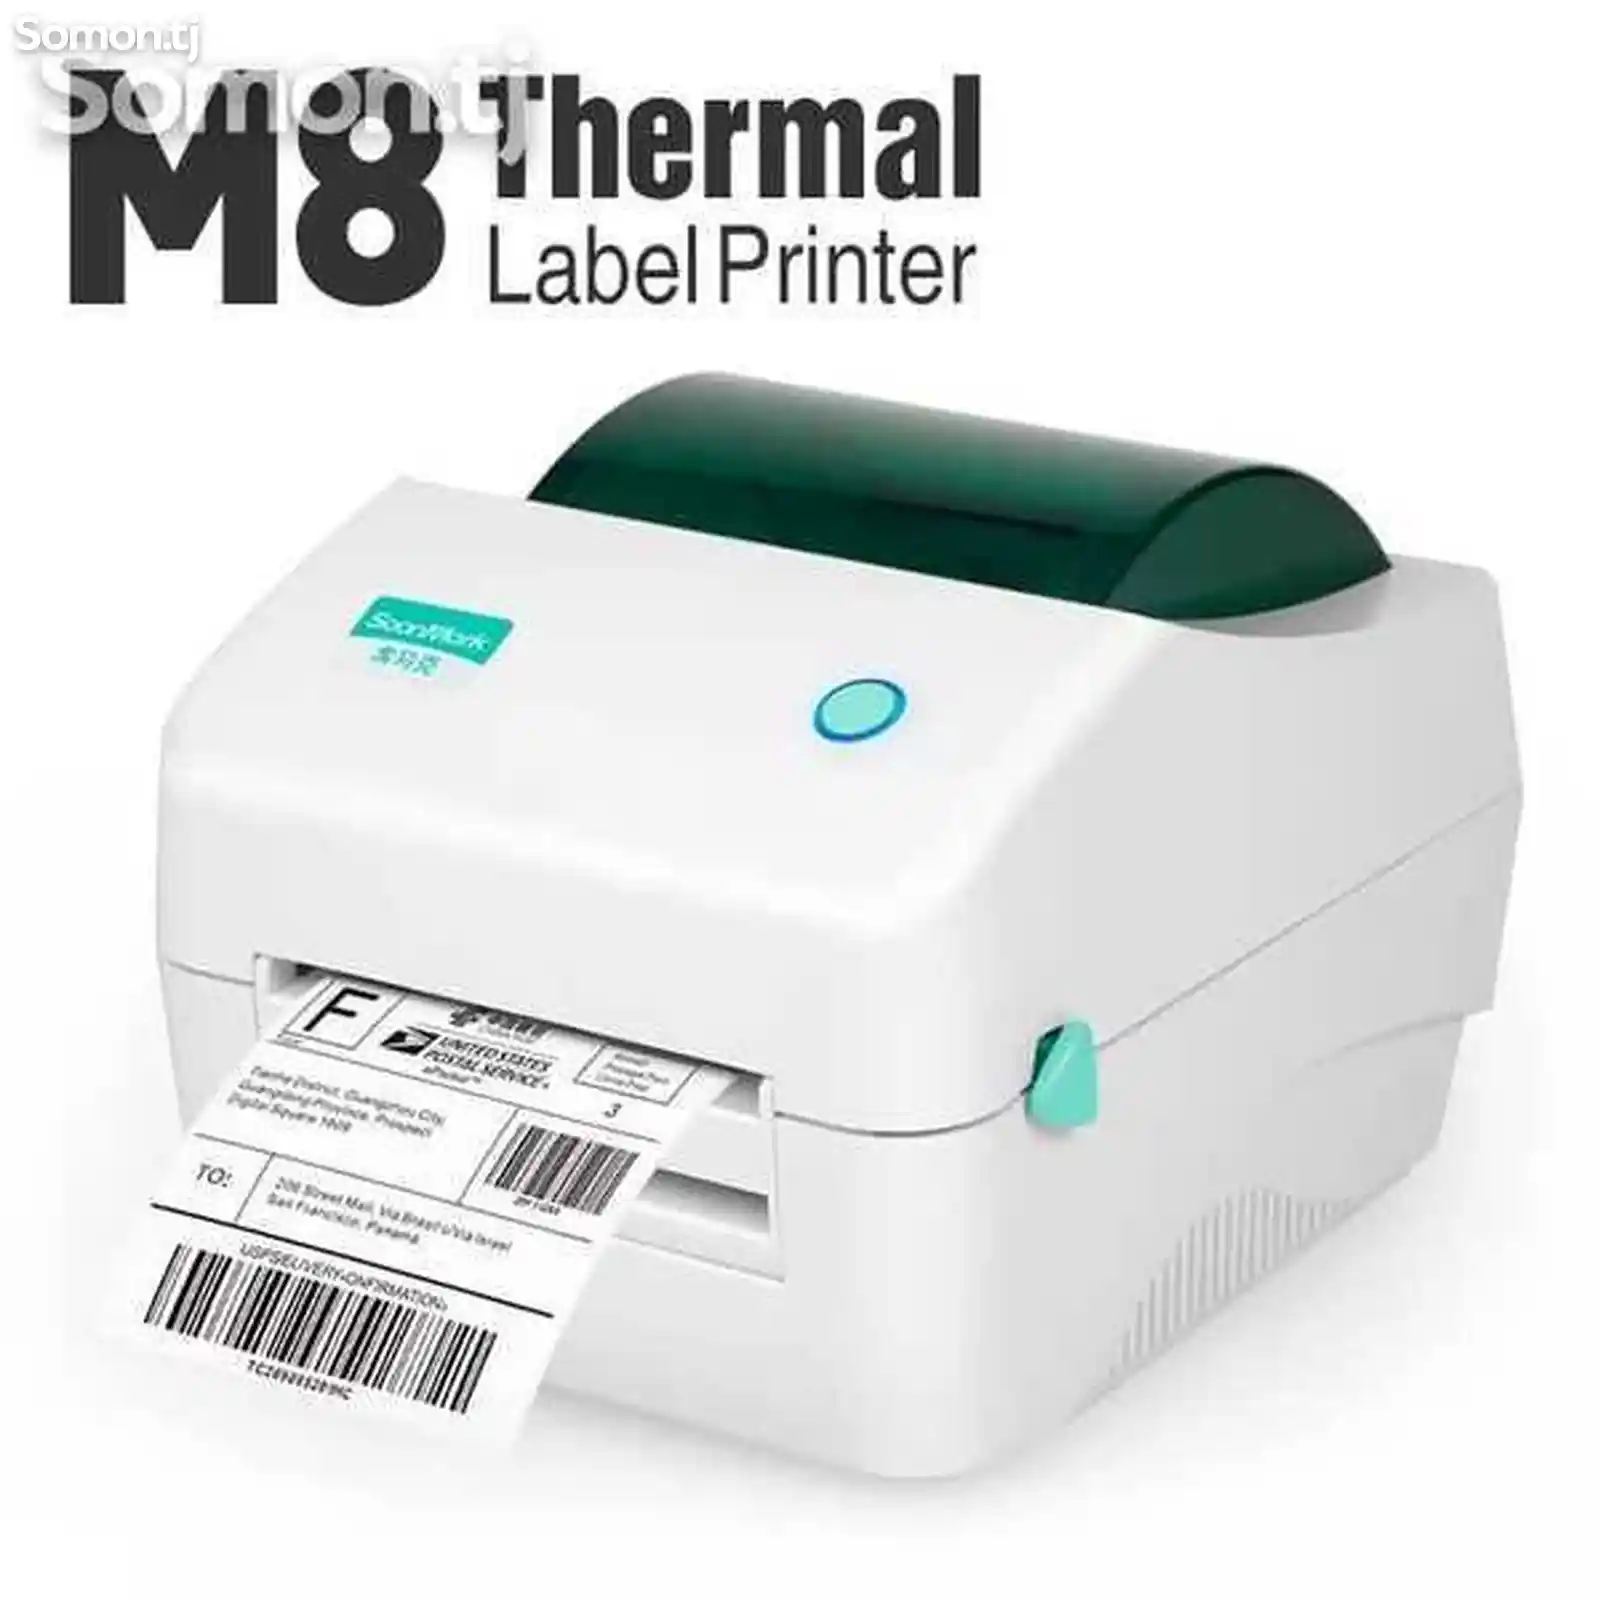 Принтер для печати этикеток М8 SoonMark-4